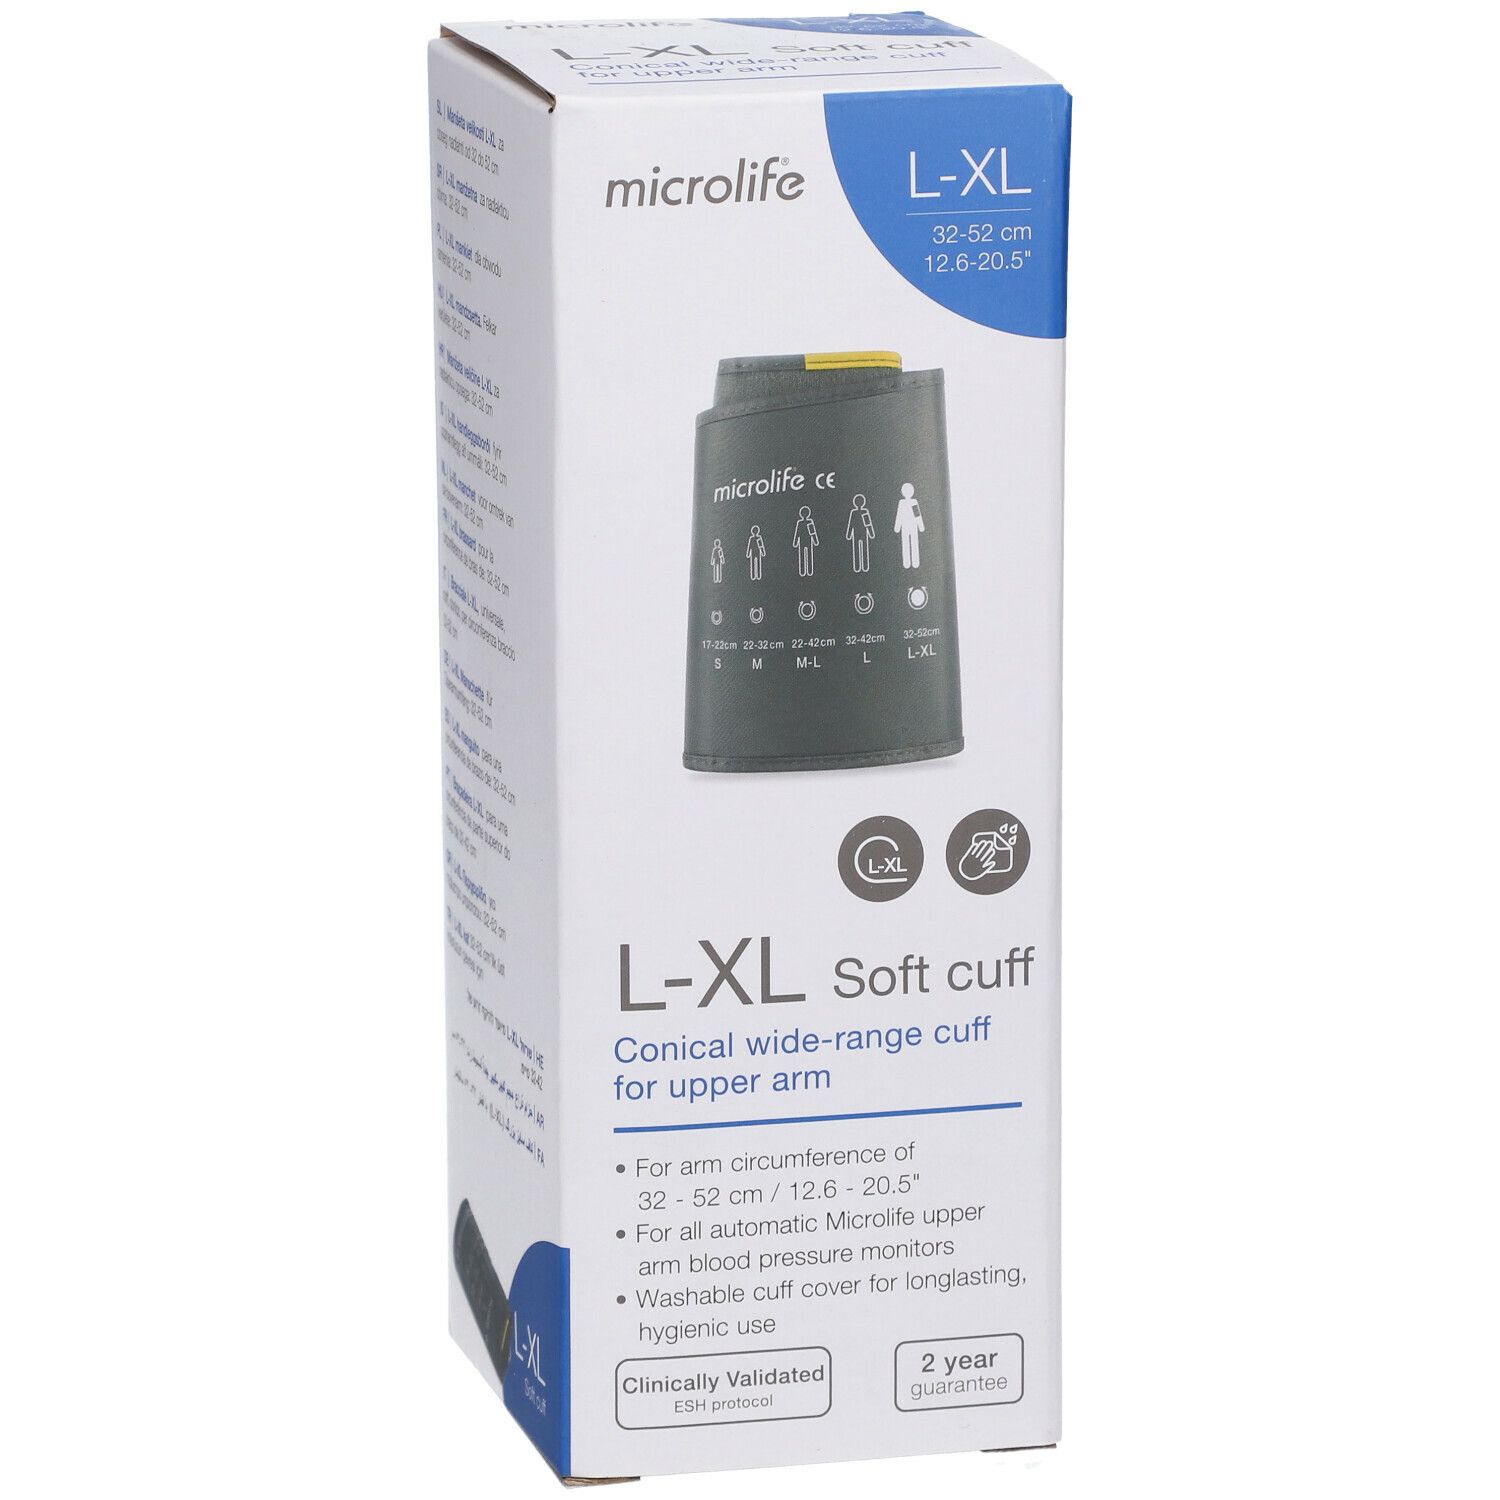 Microlife Armband L/XL Soft Con Manschette 3g 32-52cm